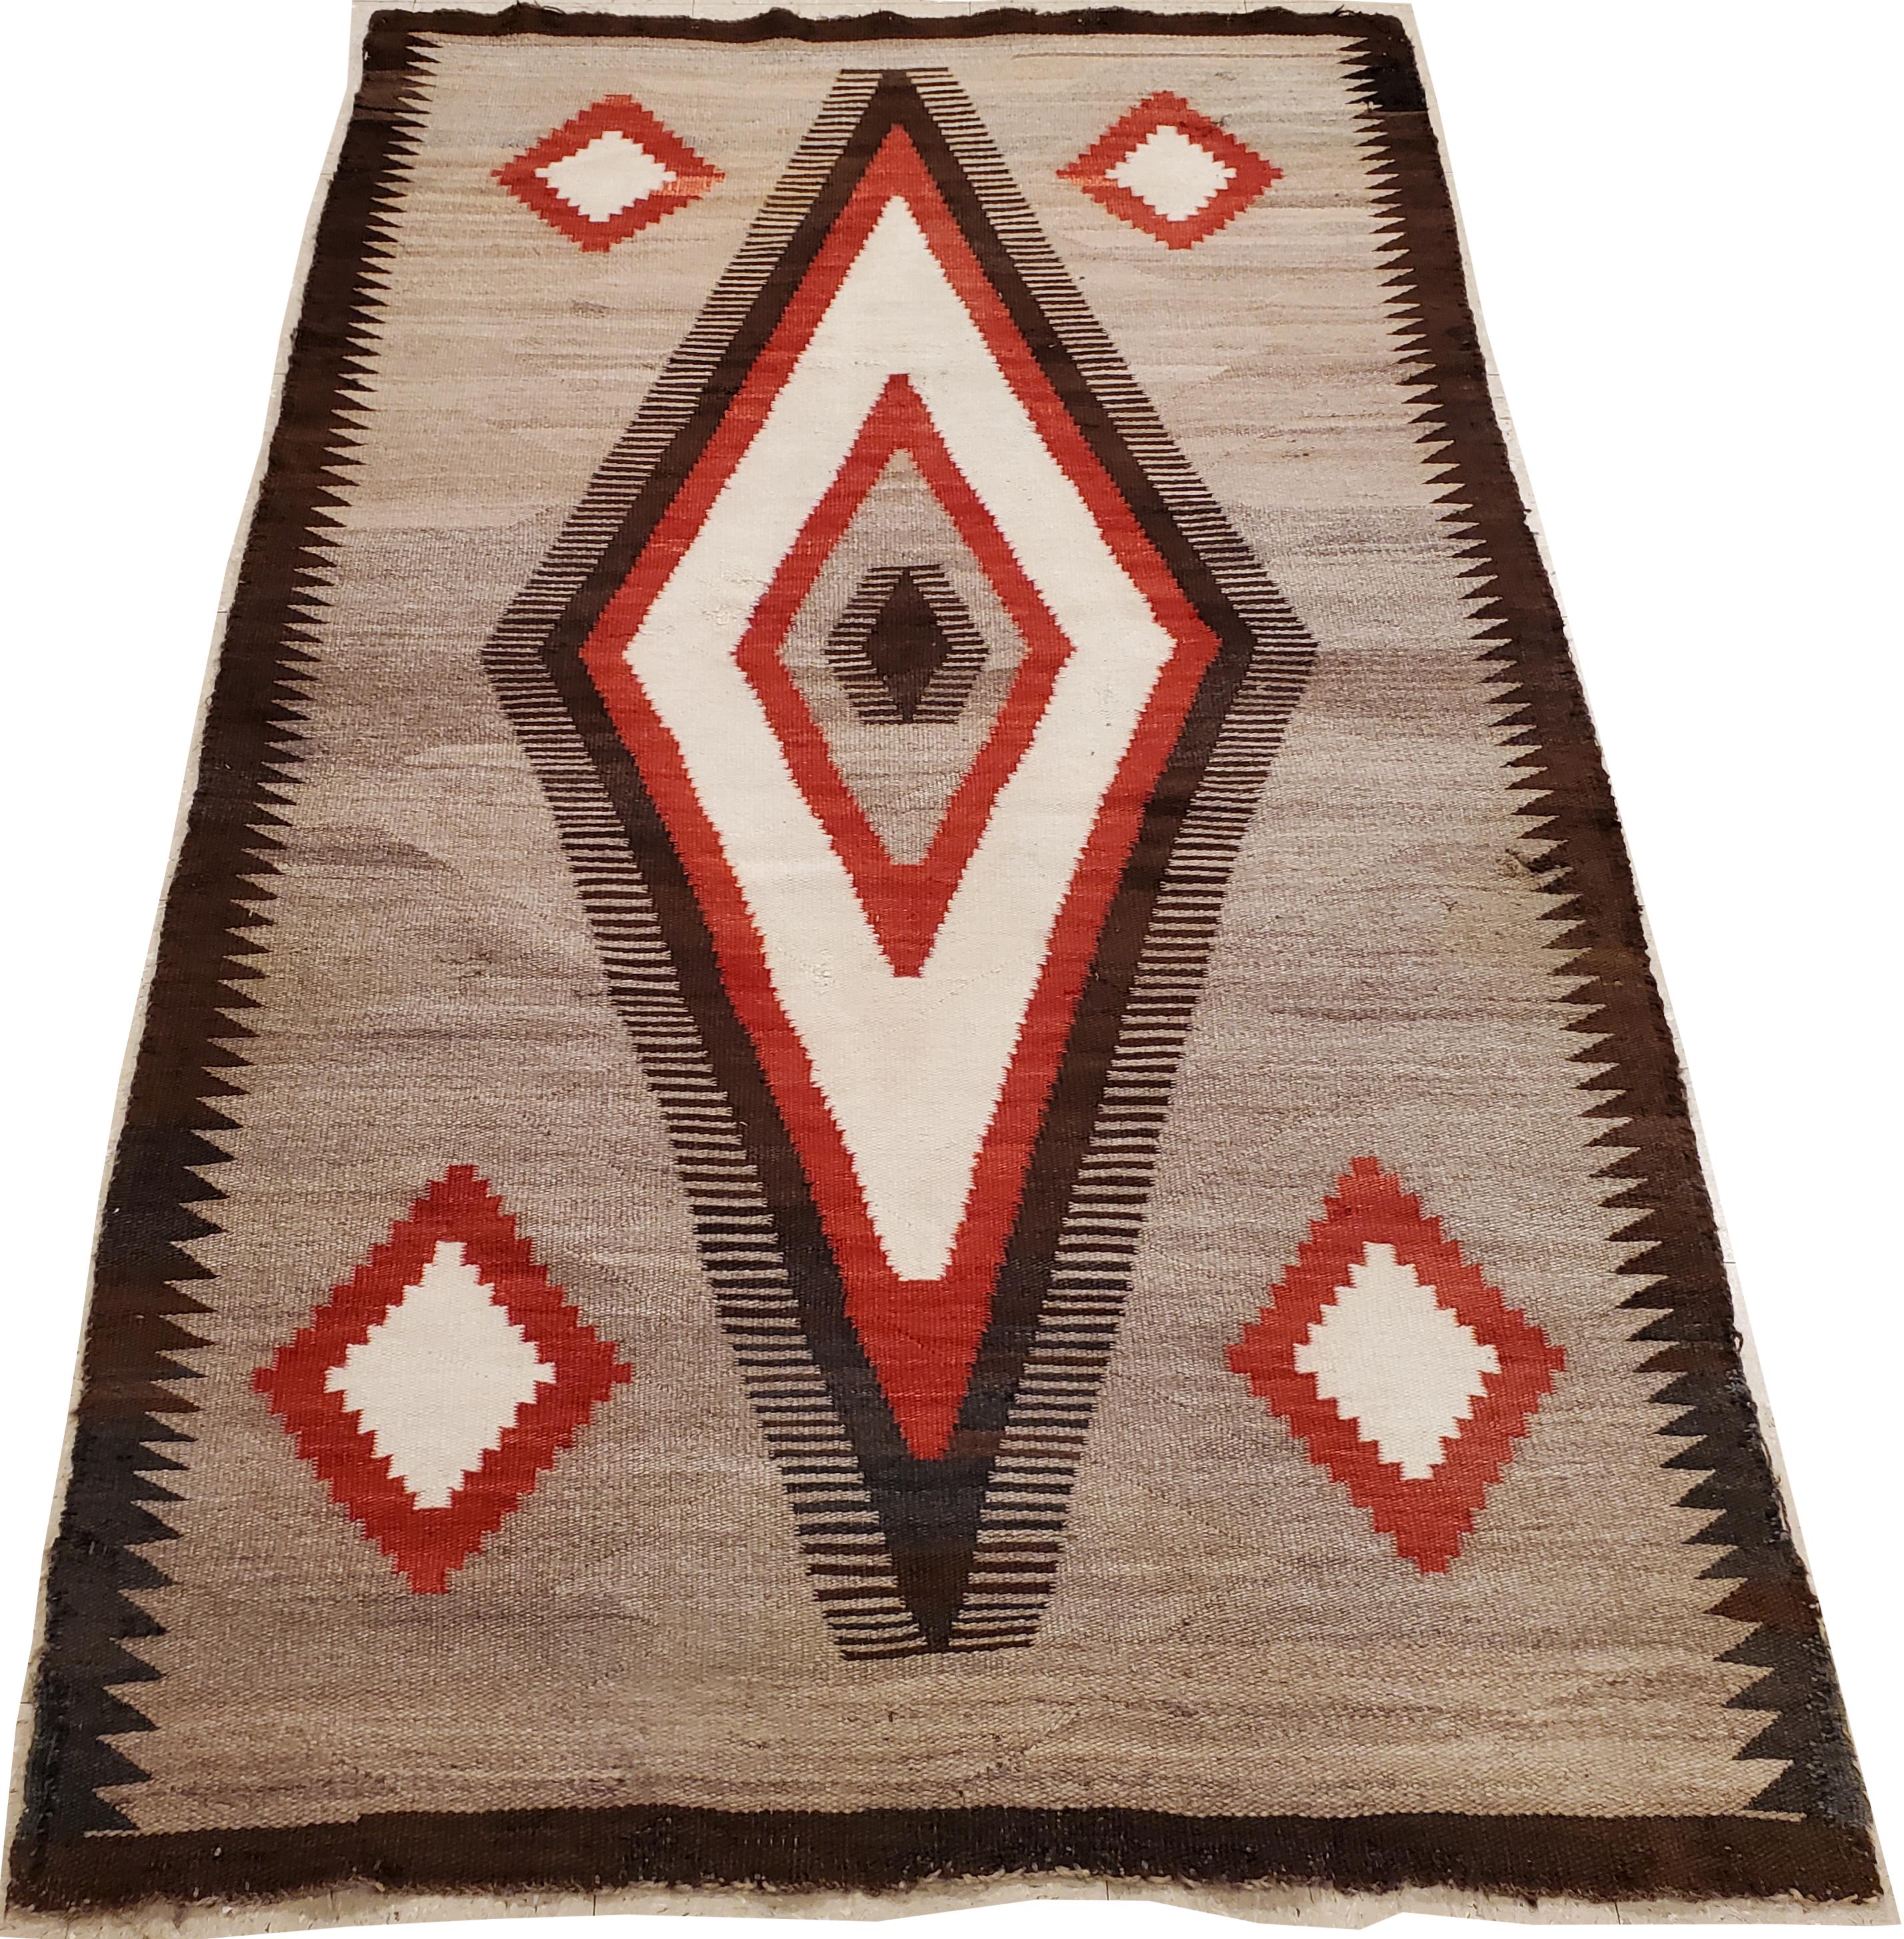 Antique Navajo Carpet, Storm Pattern Rug, Handmade Wool Rug, Gray, Red and Brown 2